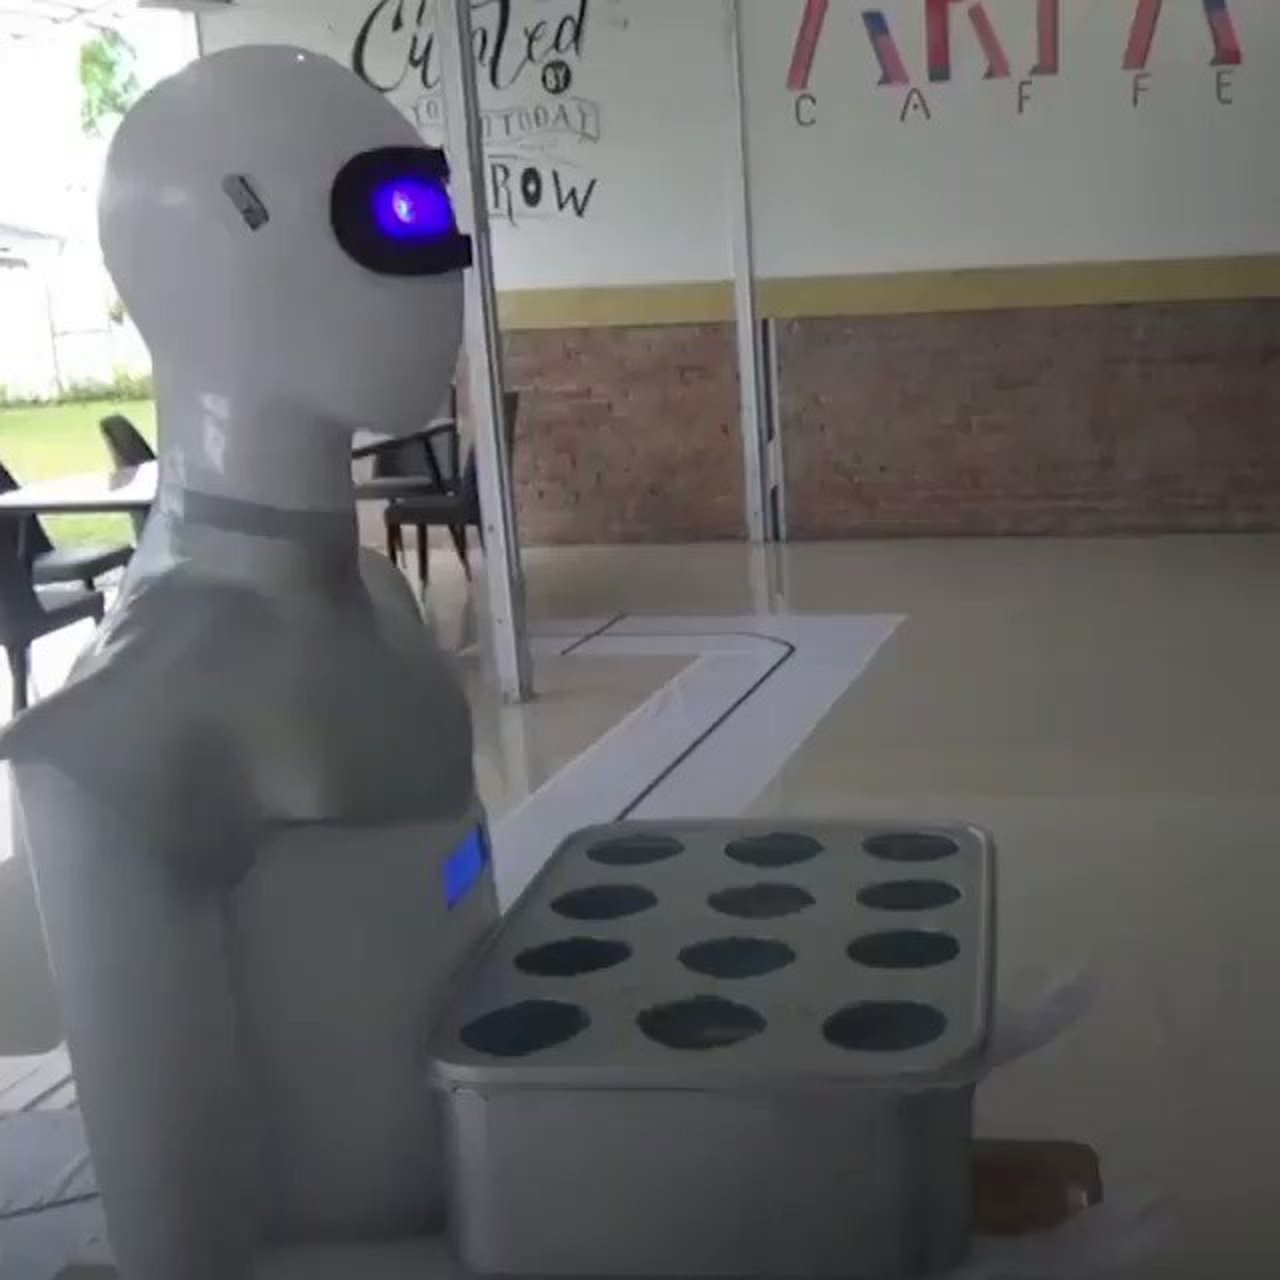 Sabai and Midun are two #robot waiters that help deliver food. By @InTheKnow #Robotics #delivery #AI #IoT #5G #Tech4Good #innovation #ArtificialIntelligence #MachineLearning Cc: @chboursin @HaroldSinnott @Hana_ElSayyed @jblefevre60 @Nicochan33 @mvollmer1 @DrJDrooghaag @Ym78200 https://t.co/MlS9cb5zpL